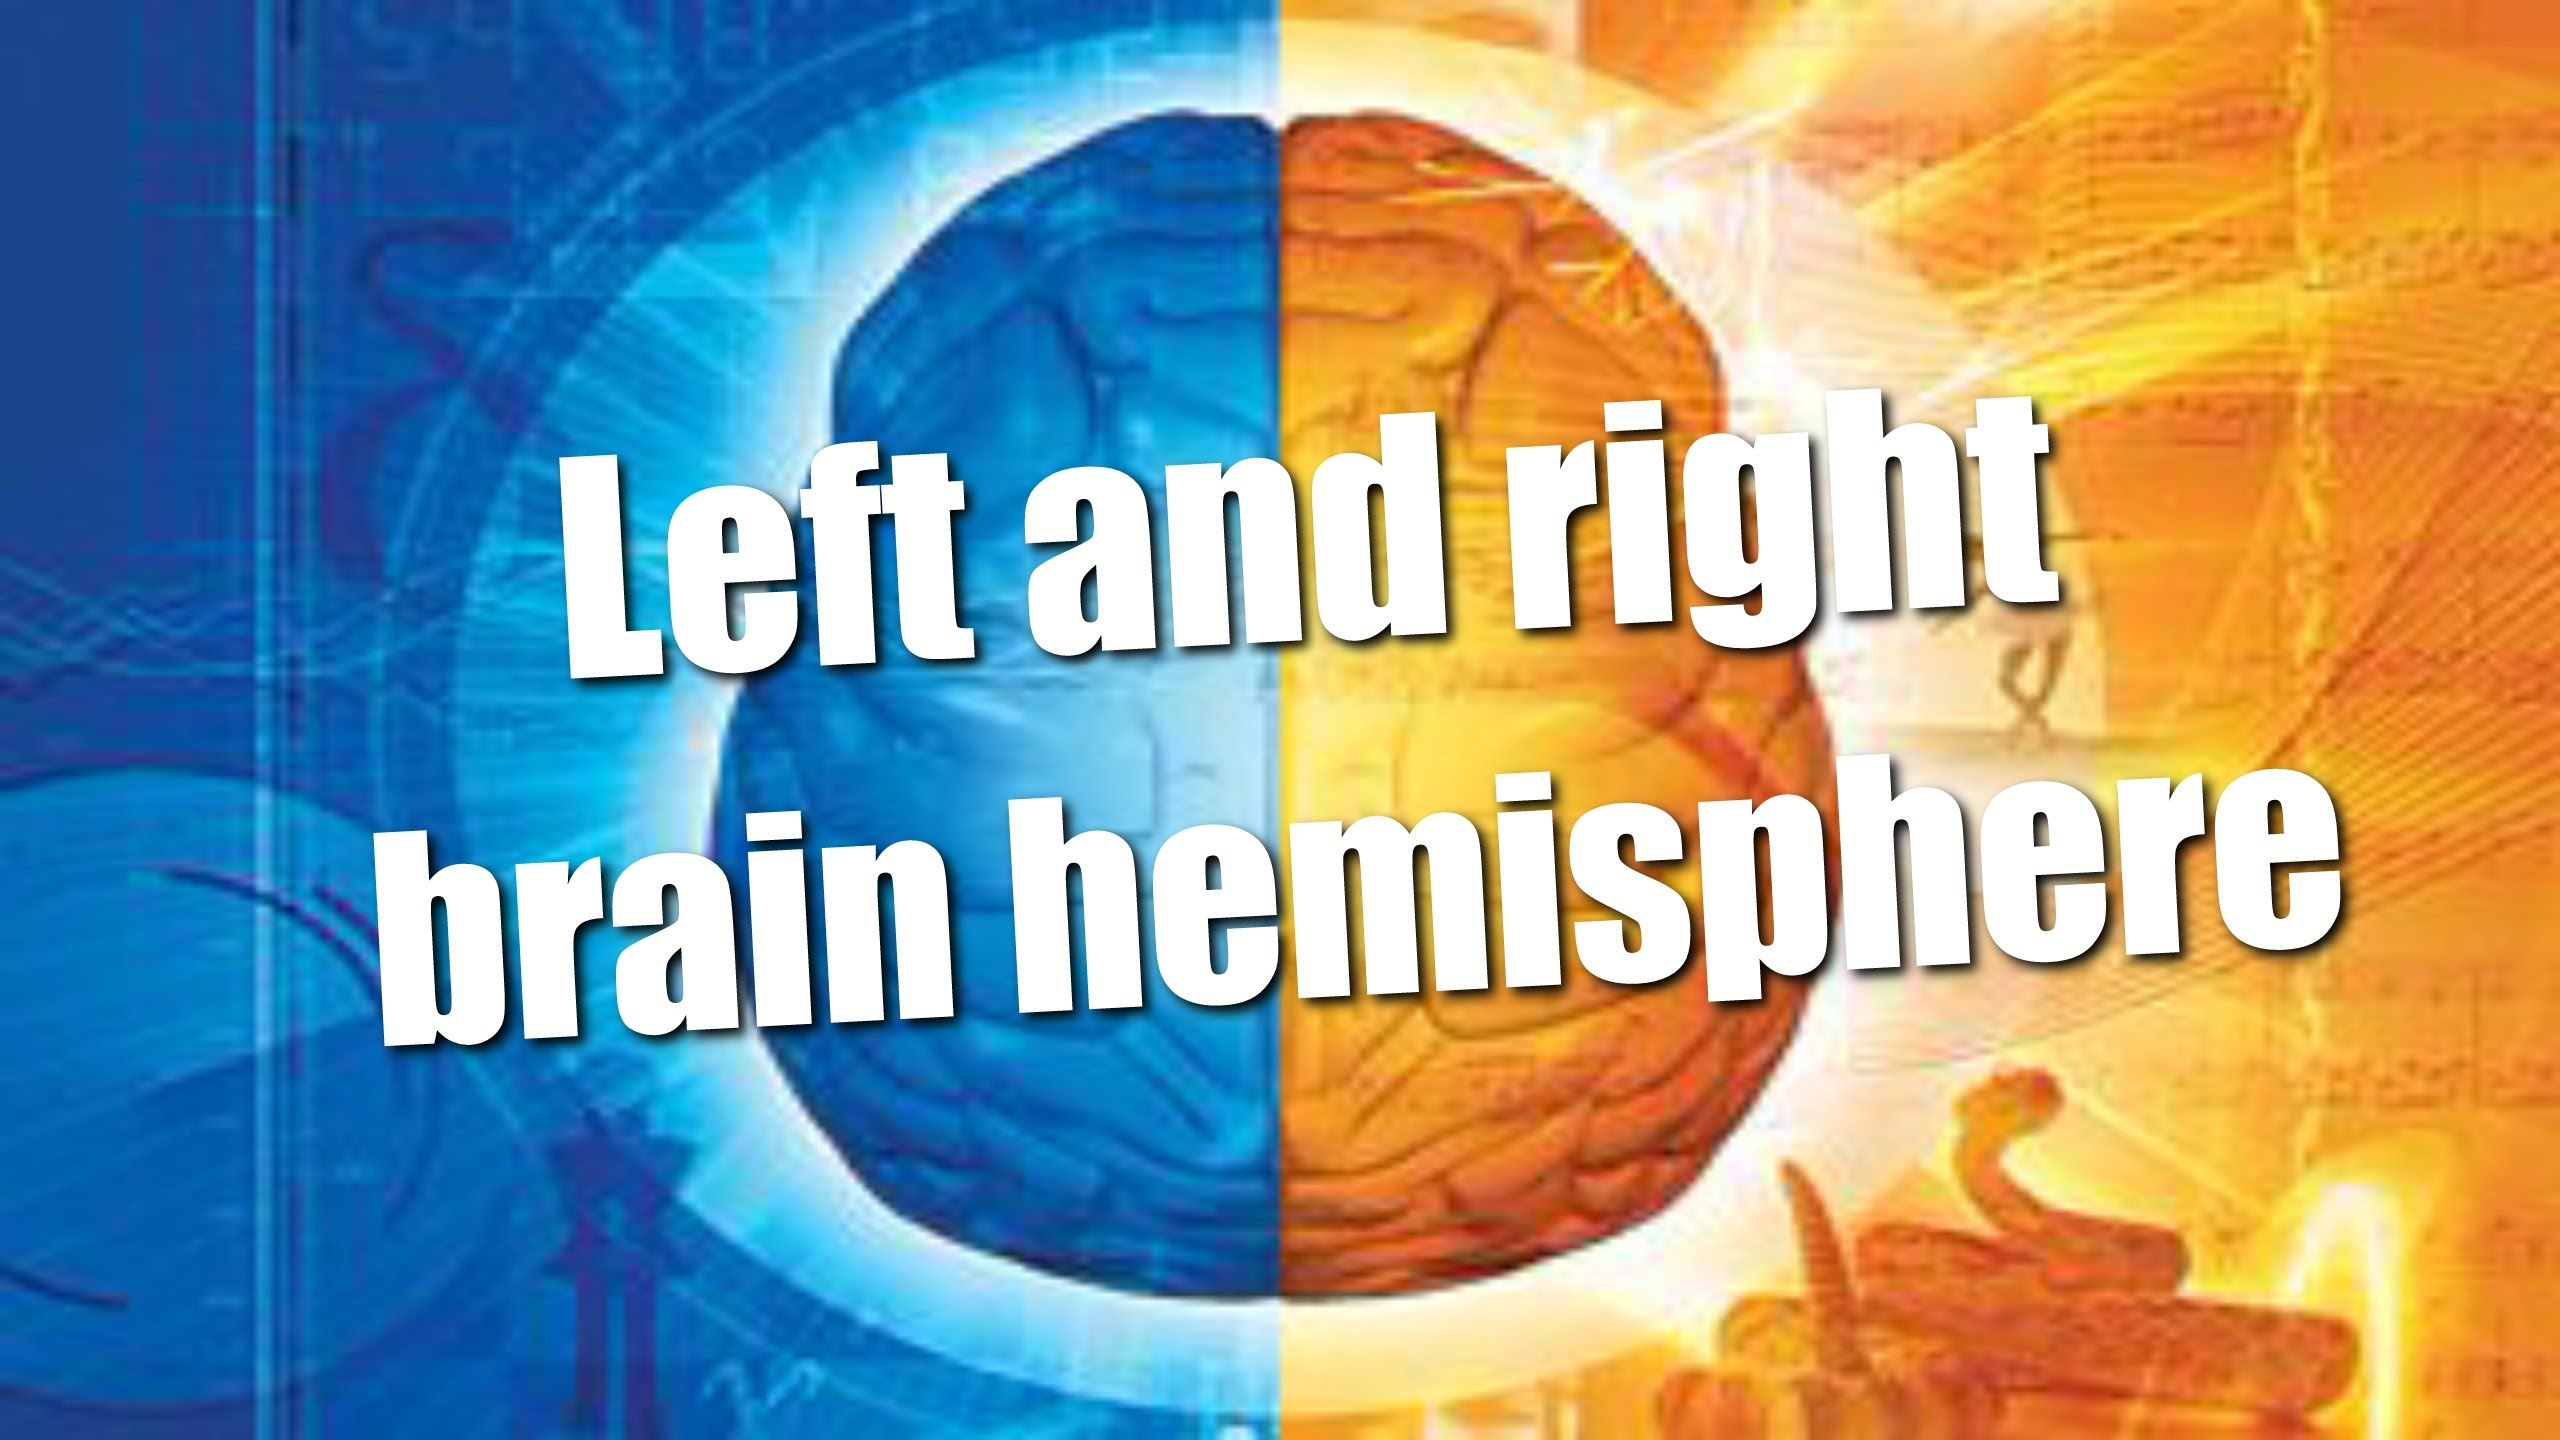 Left and right brain hemispheres - split brain theory - YouTube